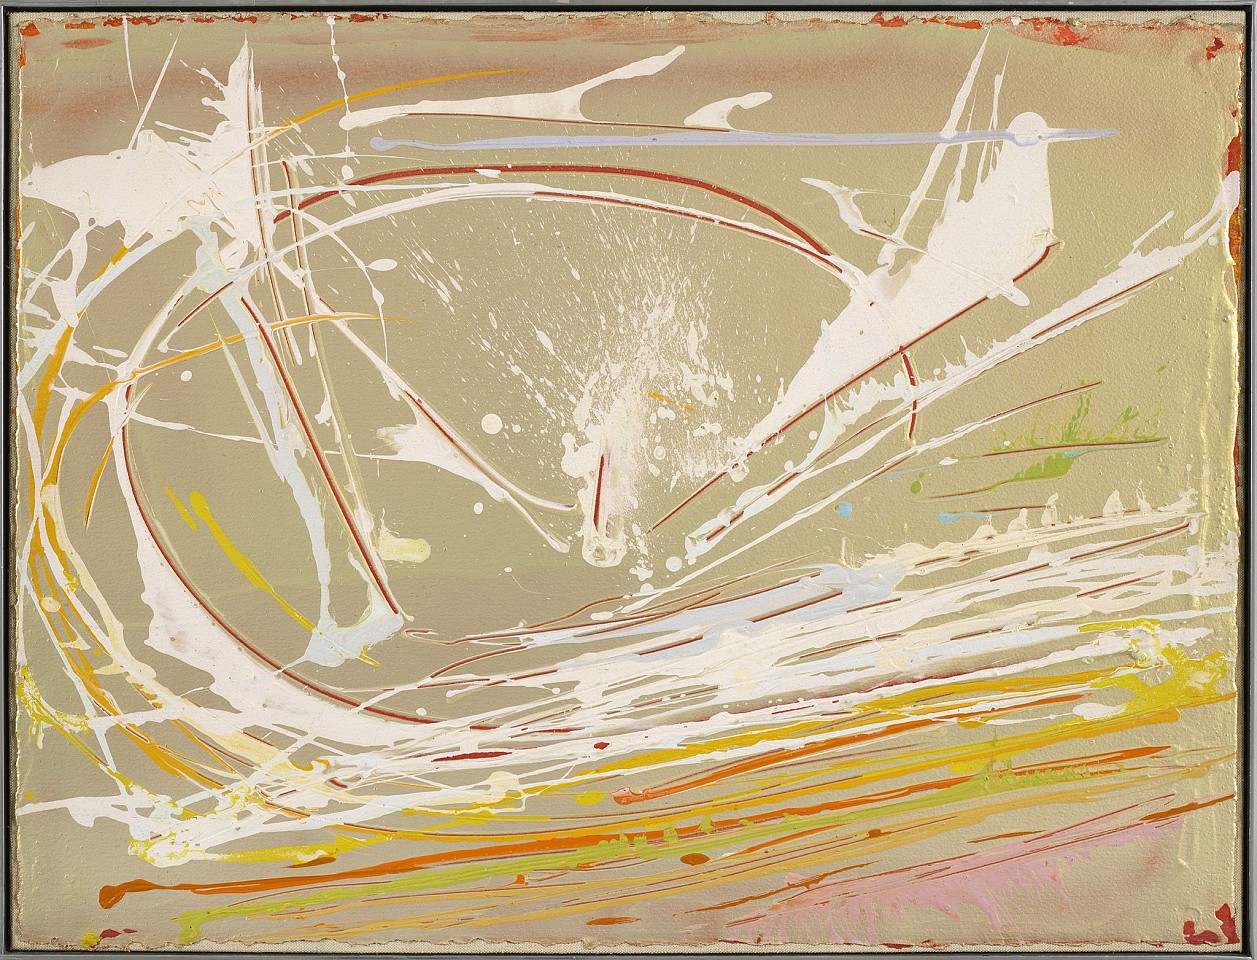 Dan Christensen, Untitled, 1984
Acrylic on paper on linen on board, 23 x 30 1/2 in. (58.4 x 77.5 cm)
CHR-00276